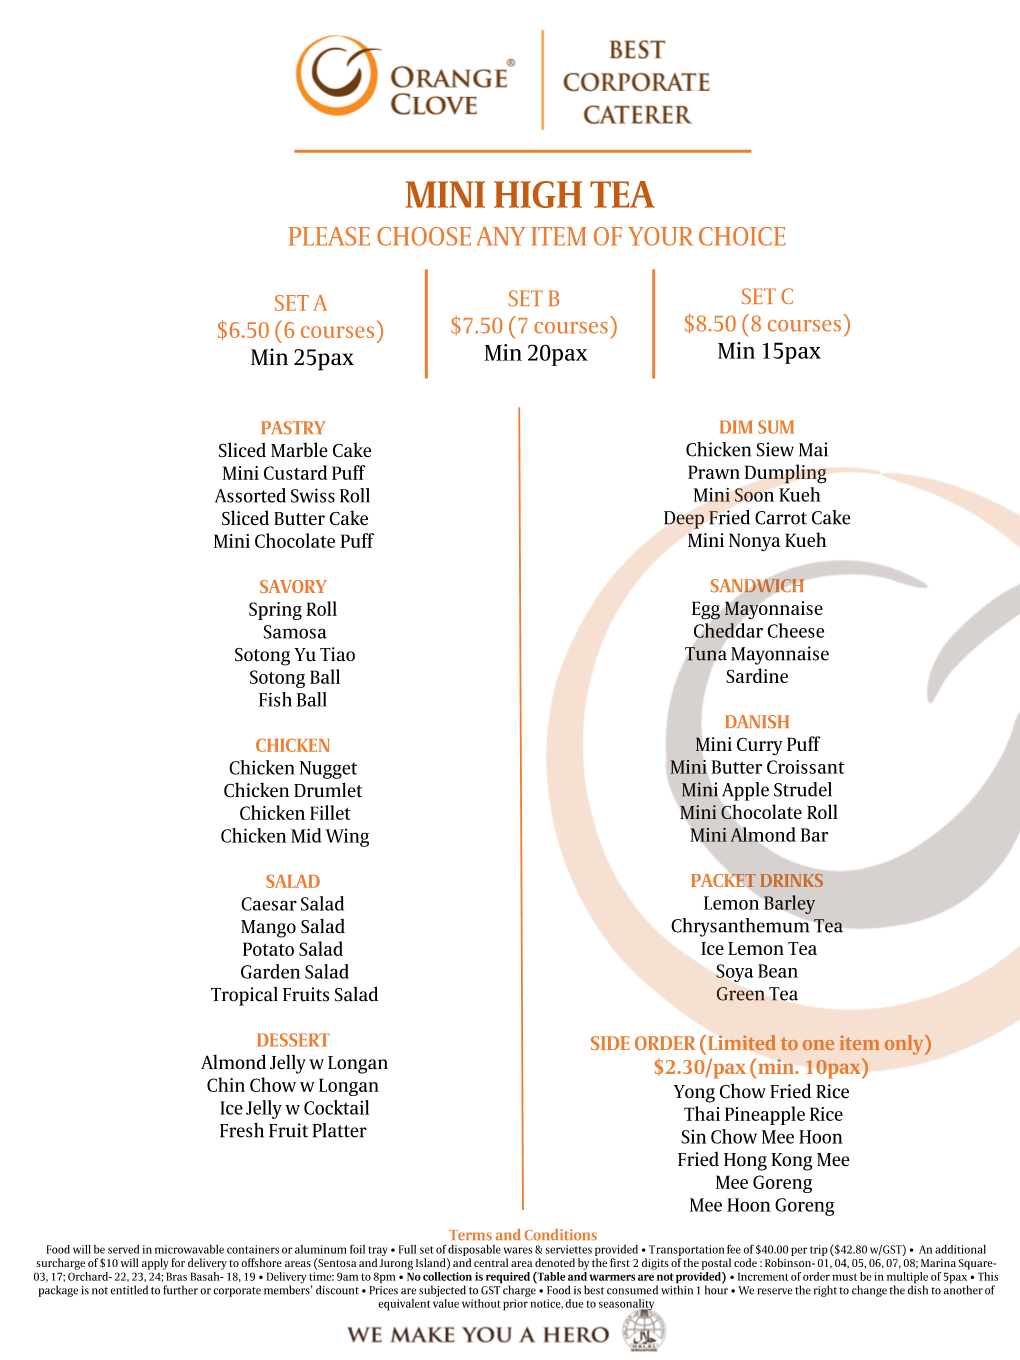 Mini High Tea Please Choose Any Item of Your Choice